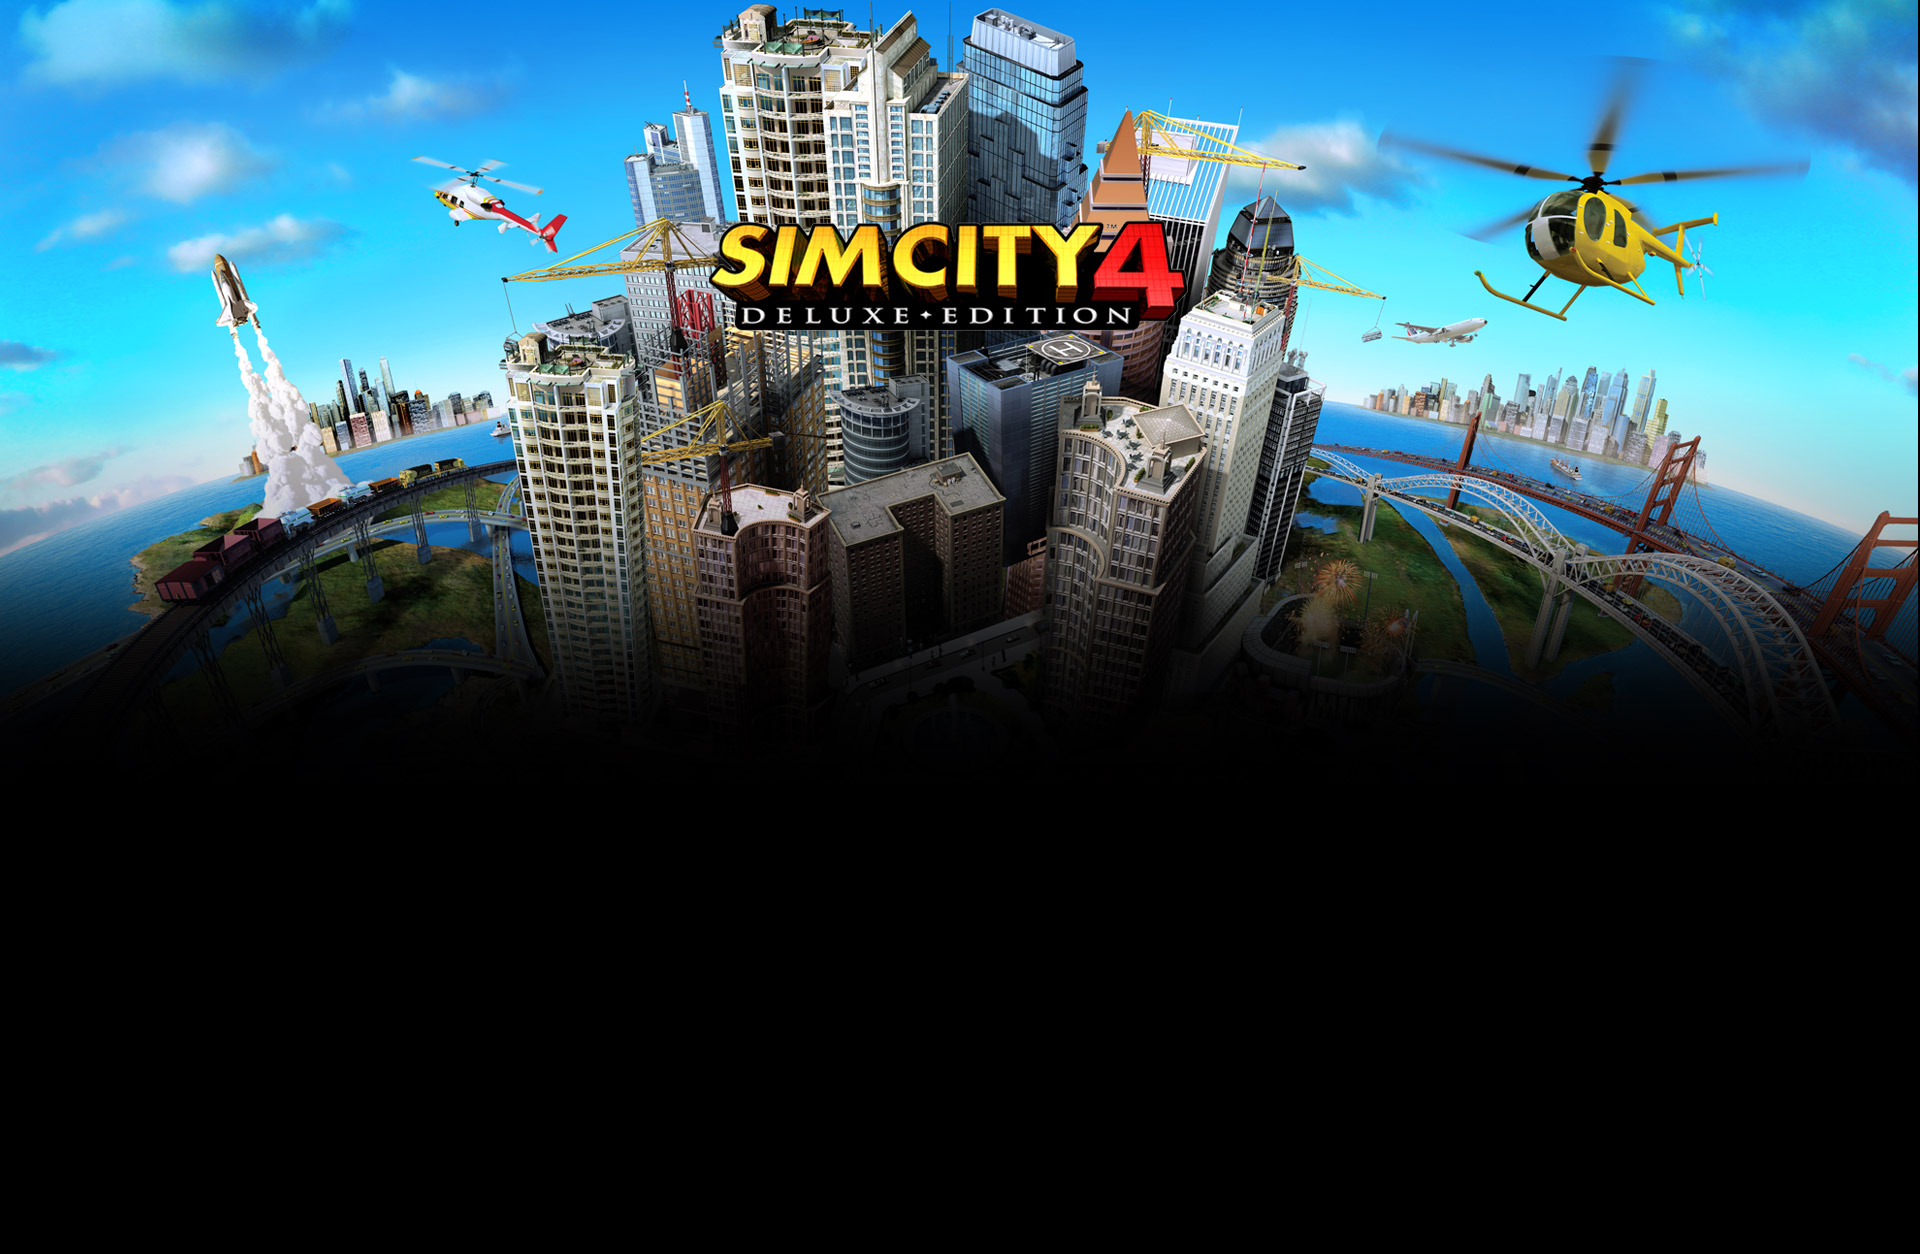 simcity 4 deluxe edition download ita